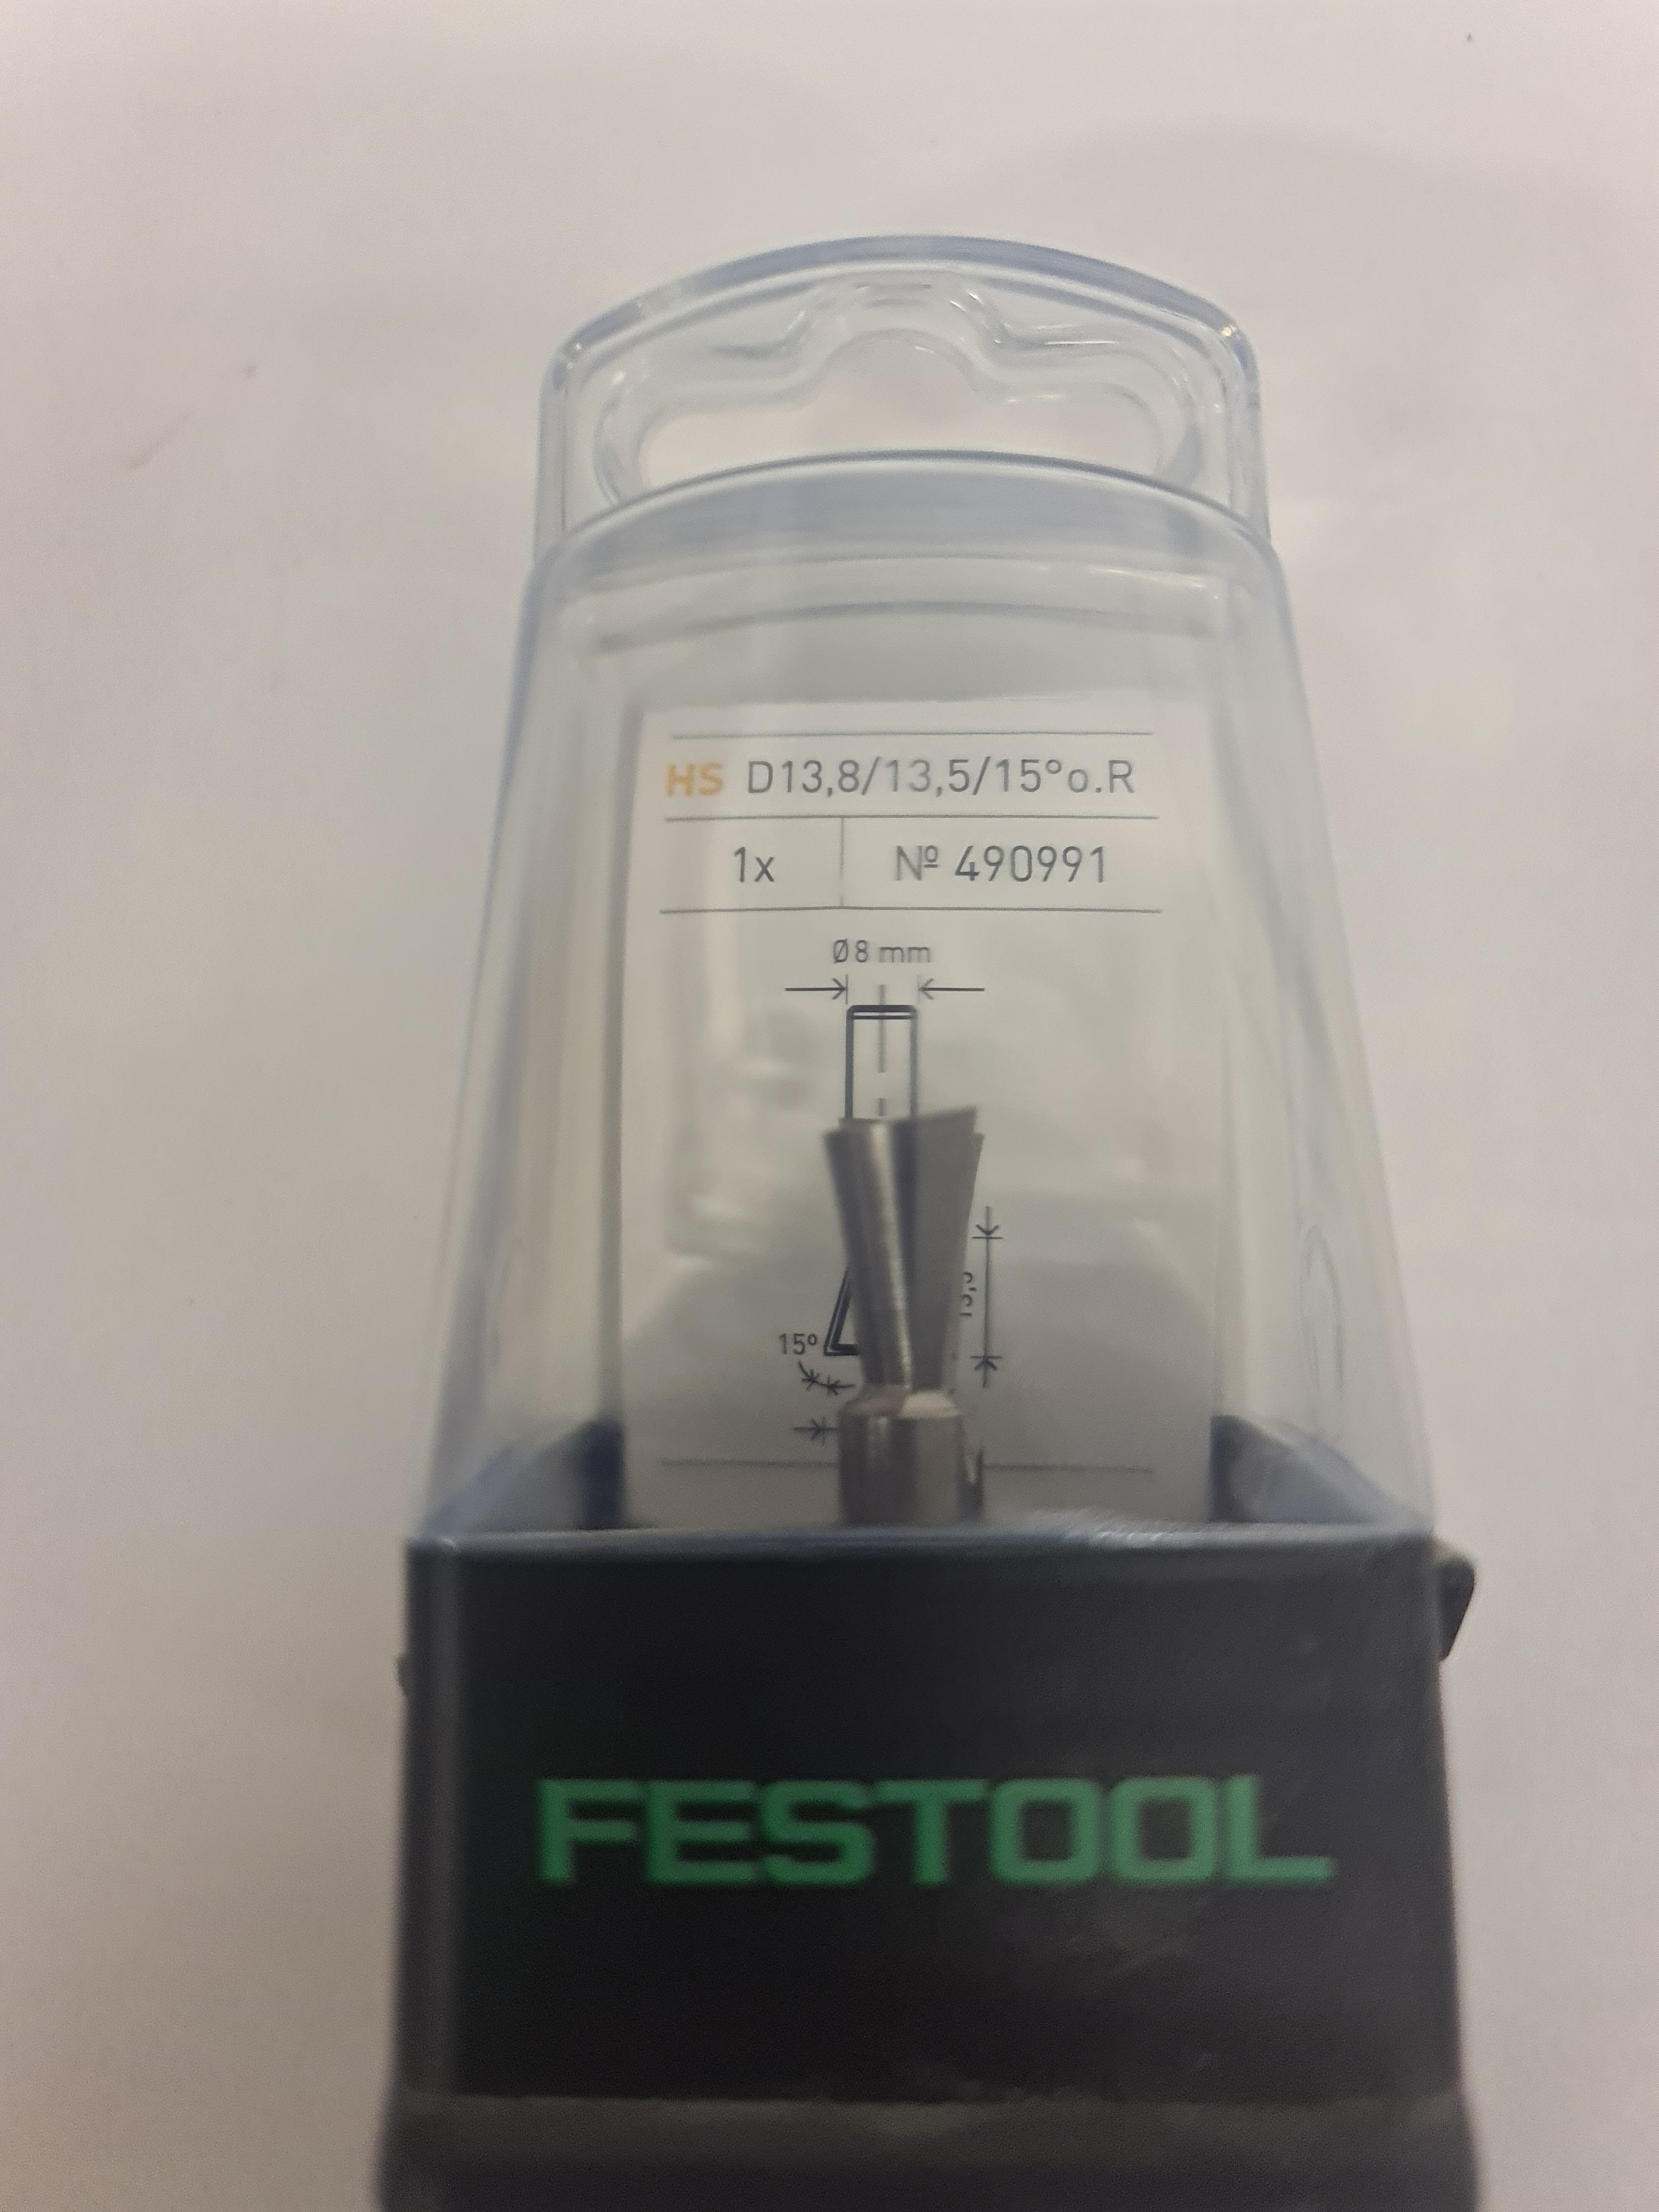 Festool 490991 Dovetail Cutter